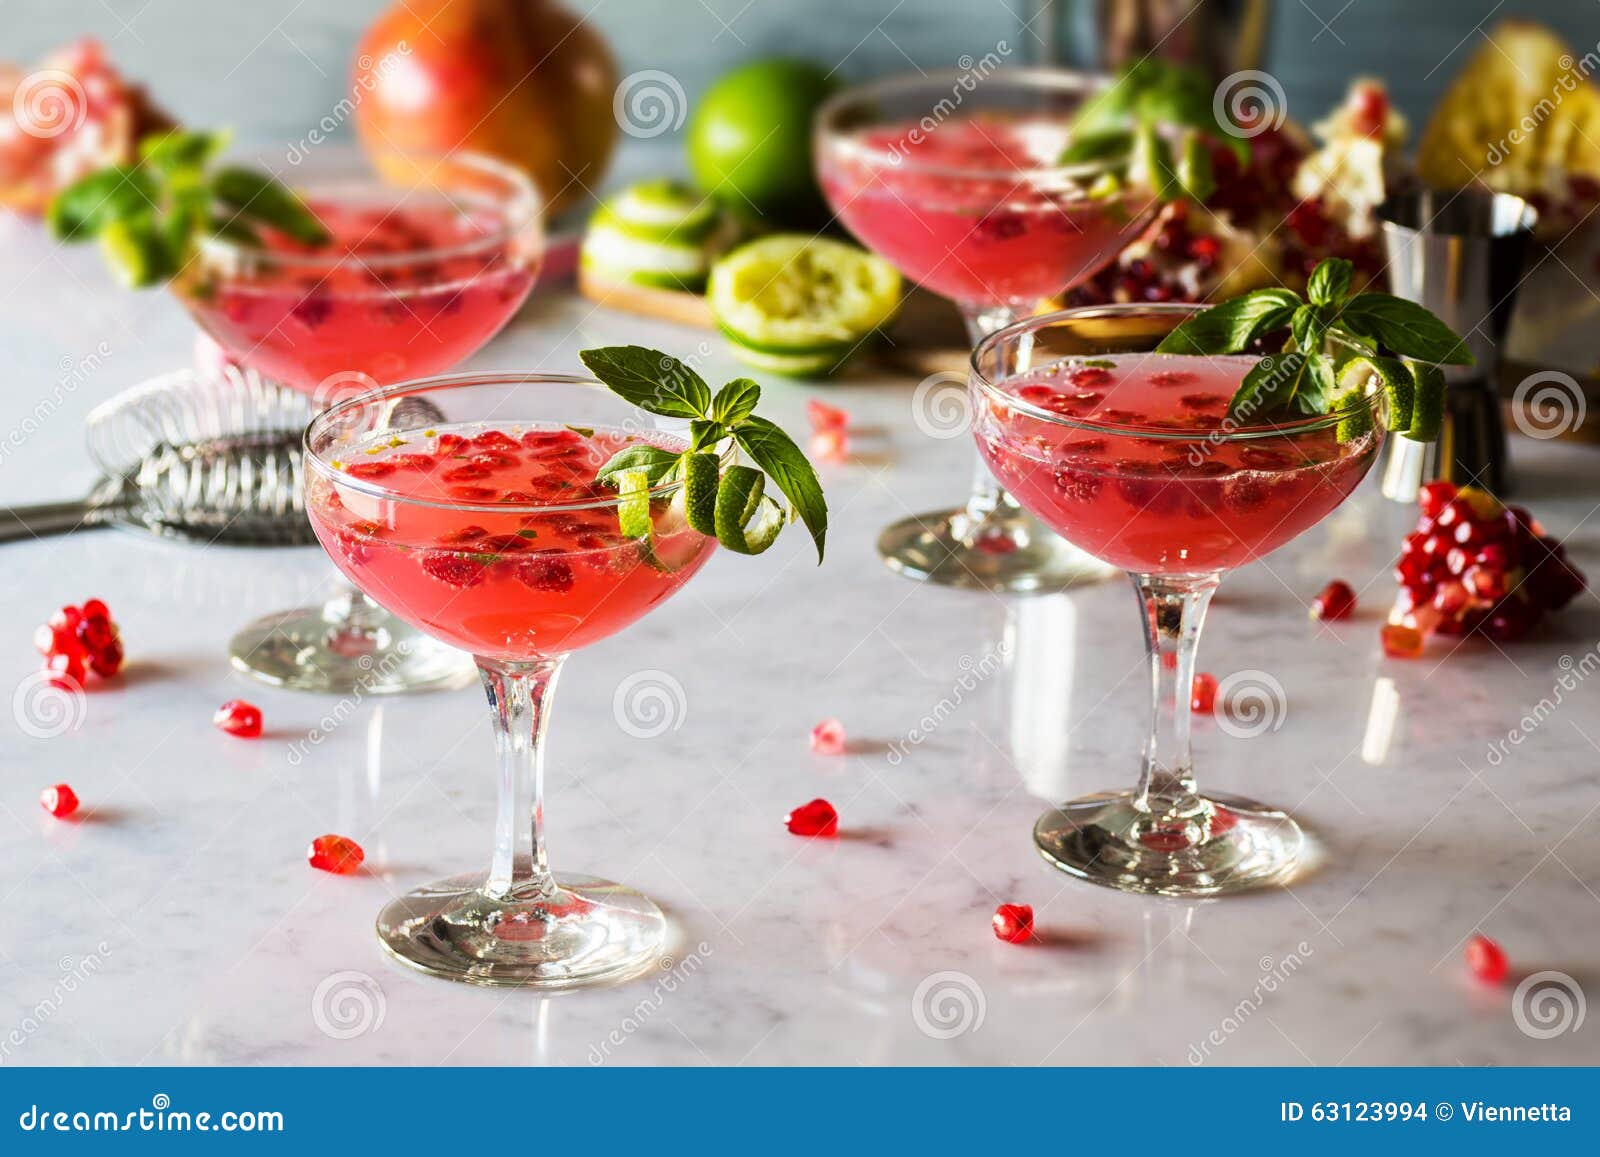 pomegranate basil martini or gin smash cocktail